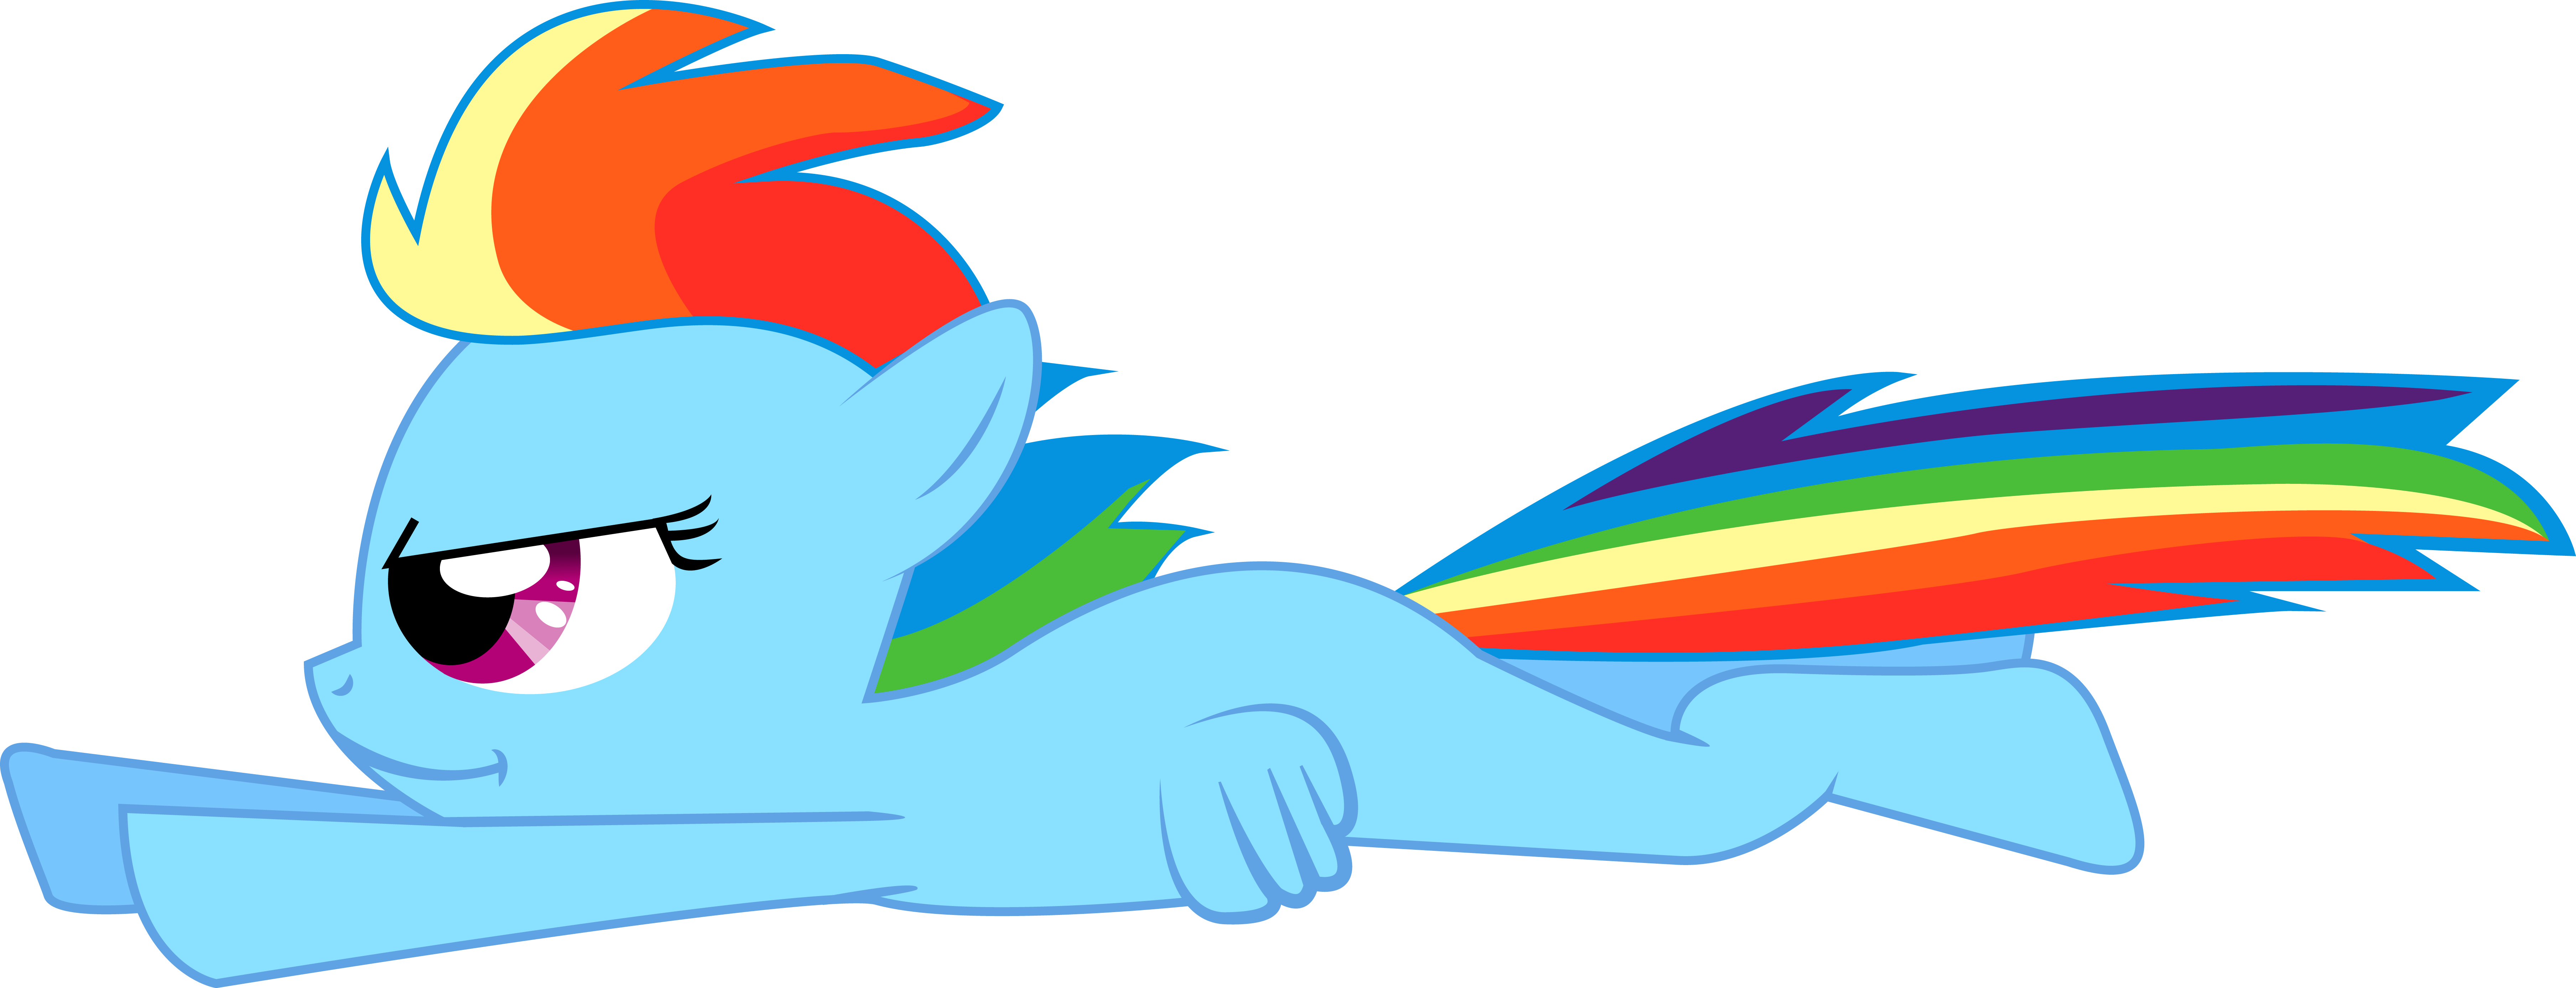 Filly Rainbow Dash By Silentmatten - My Little Pony Filly Rainbow Dash (7232x2773)